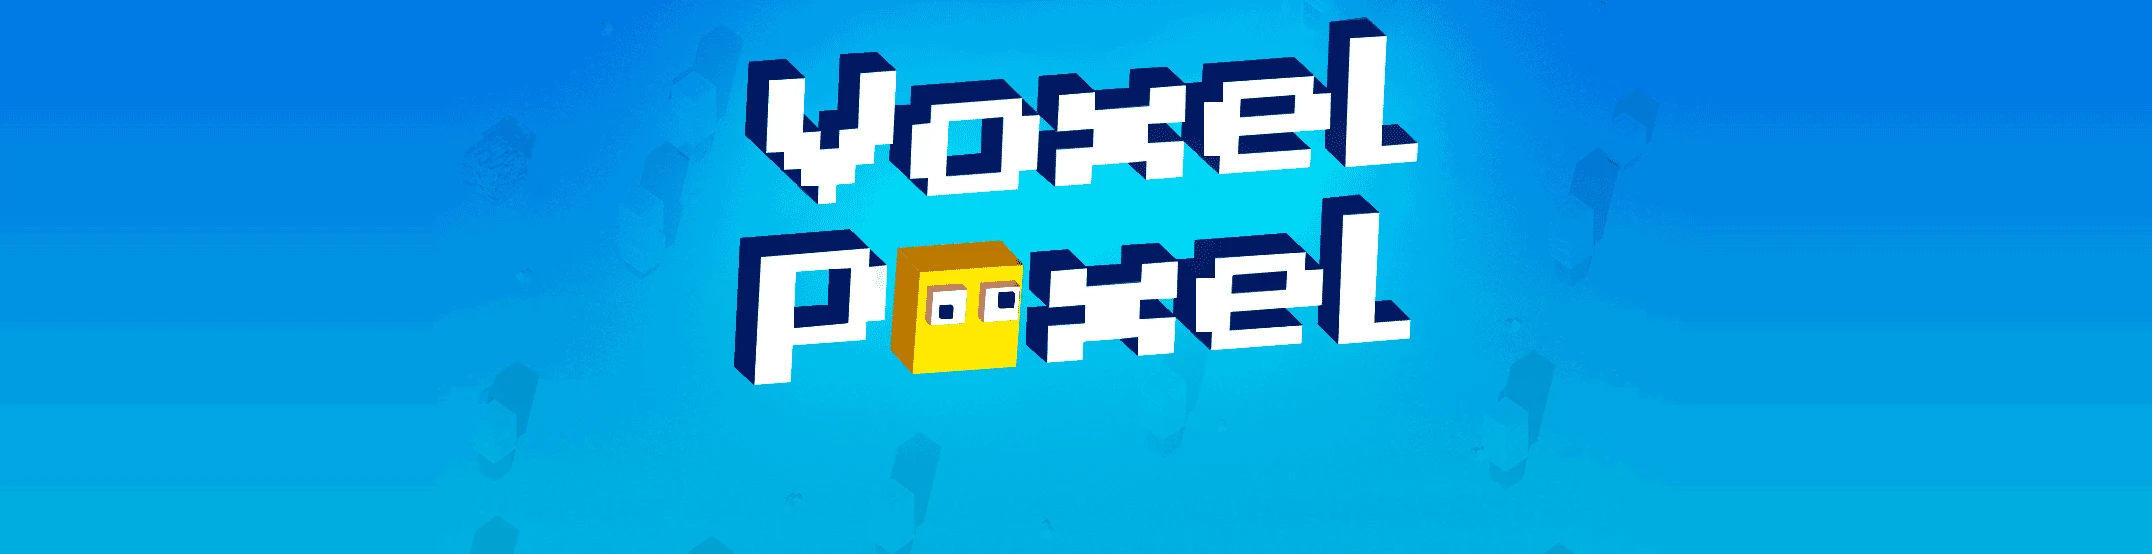 Voxel Poxel - .io genre